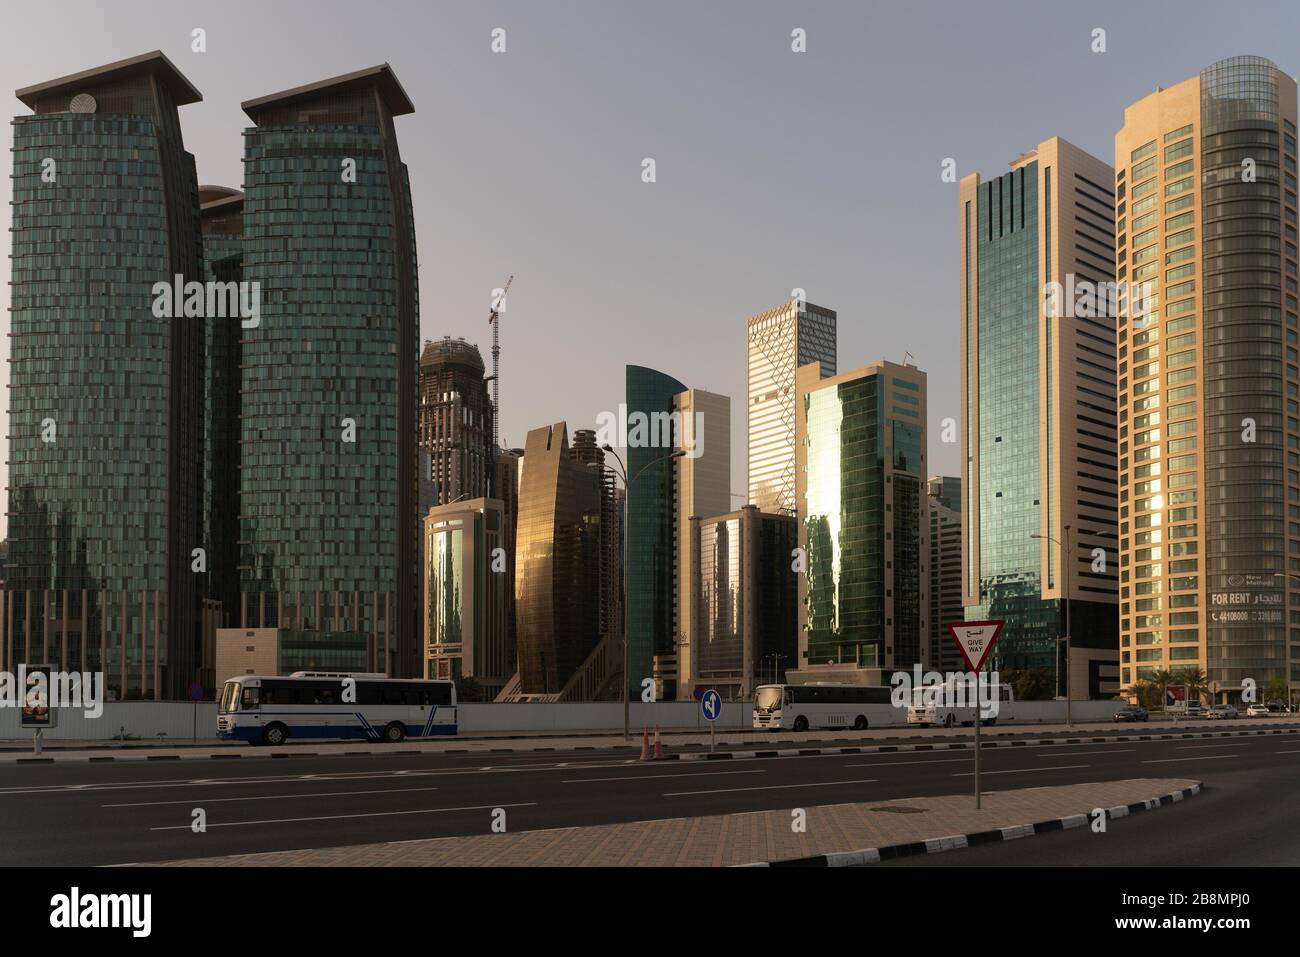 Les gratte-ciel de Doha, la capitale du Qatar Banque D'Images